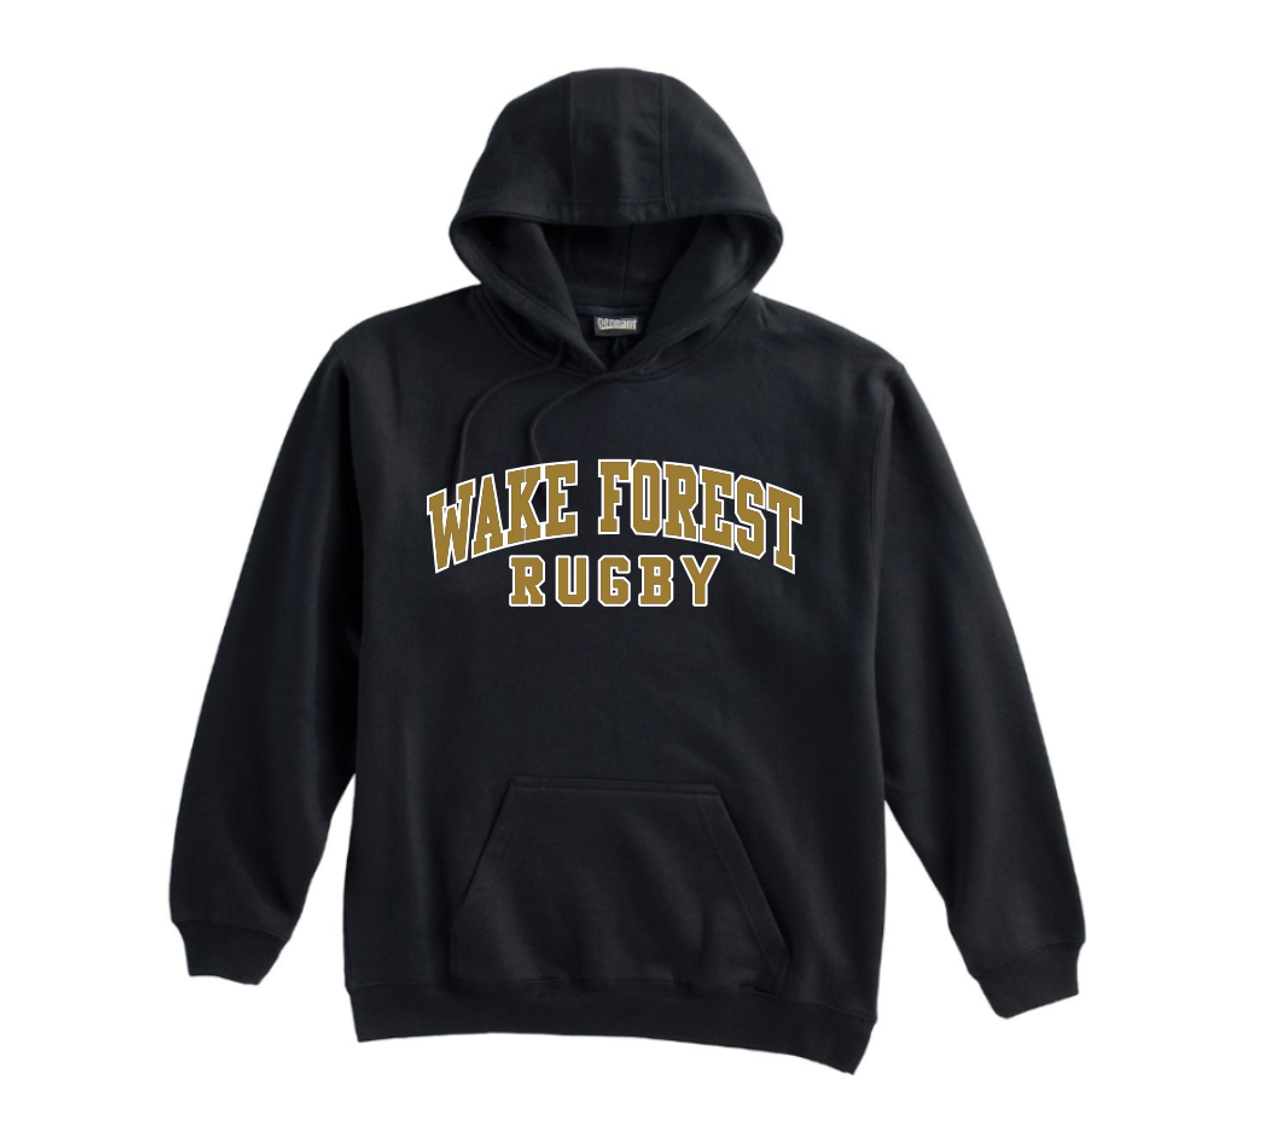 Wake Forest Hooded Sweatshirt, Black